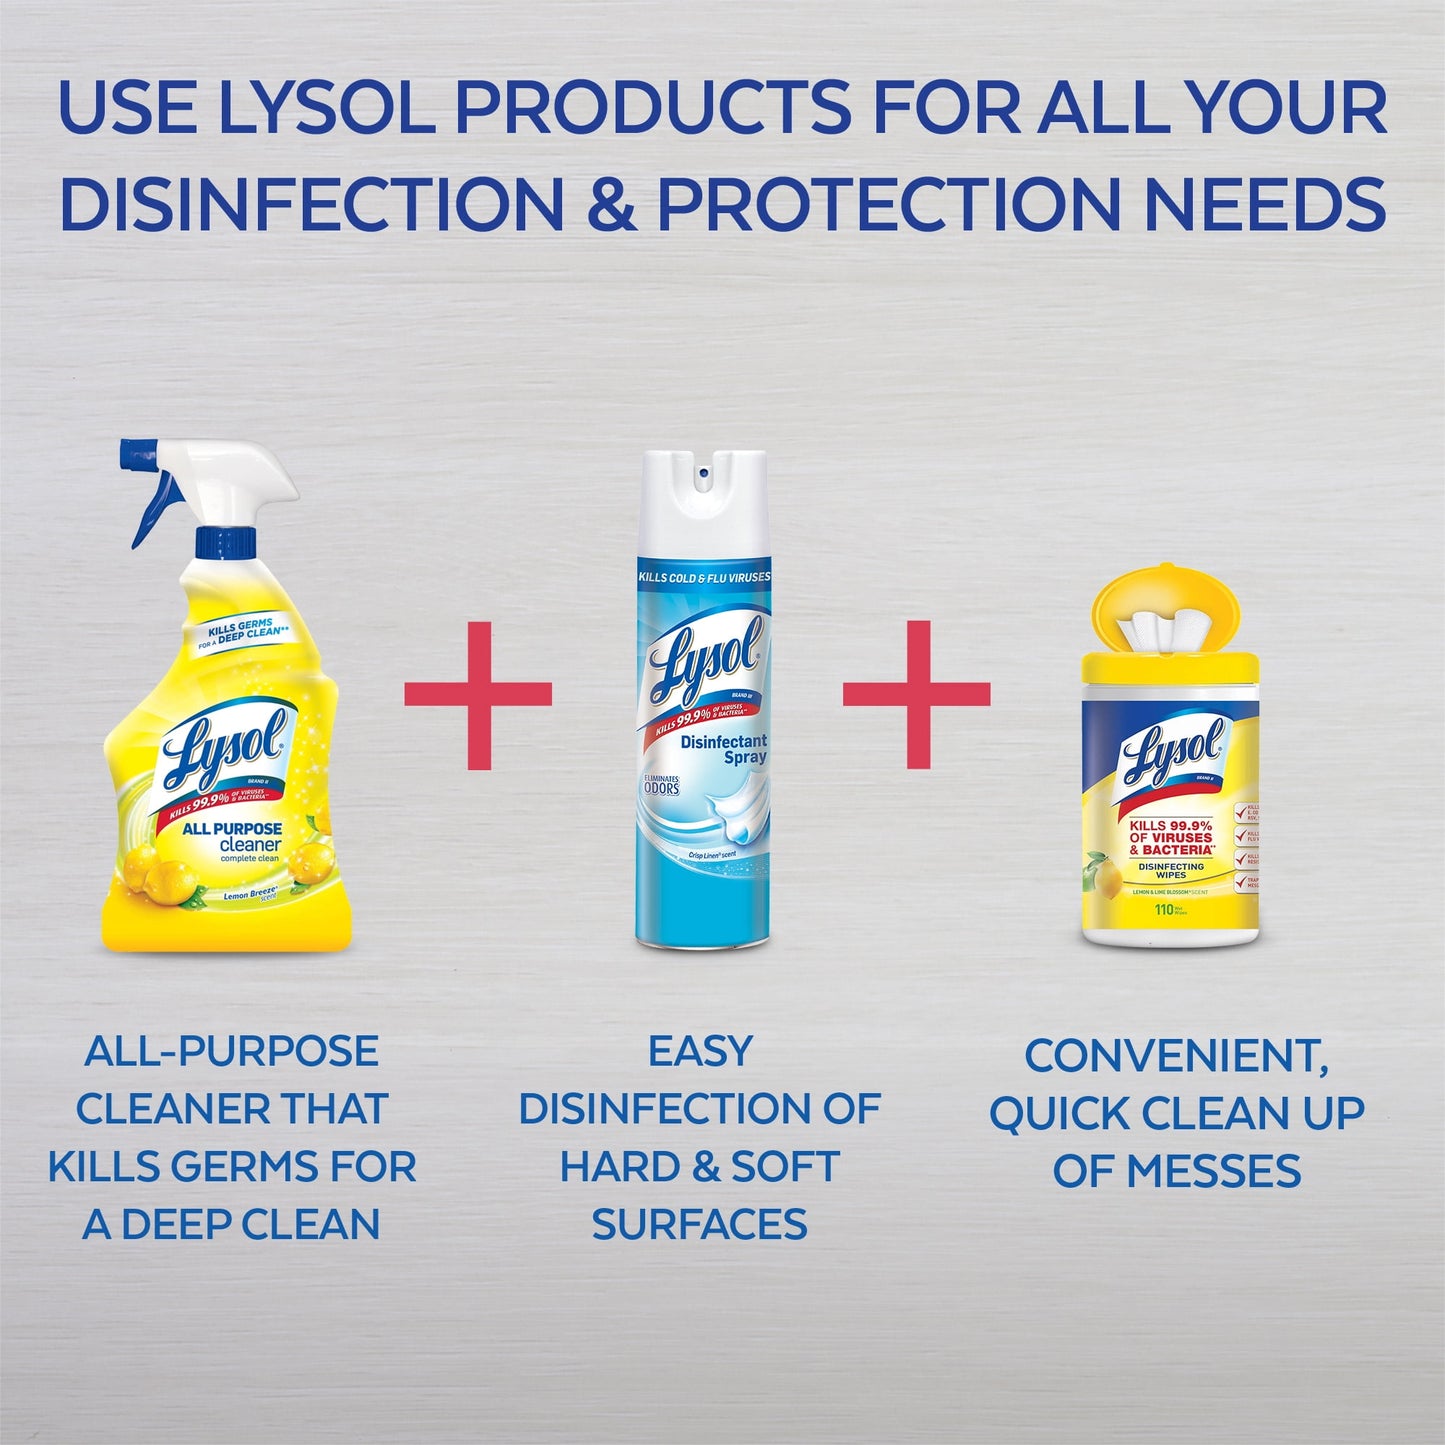 Lysol All Purpose Cleaner Spray, Lemon Breeze, Kills Germs (2X32oz)